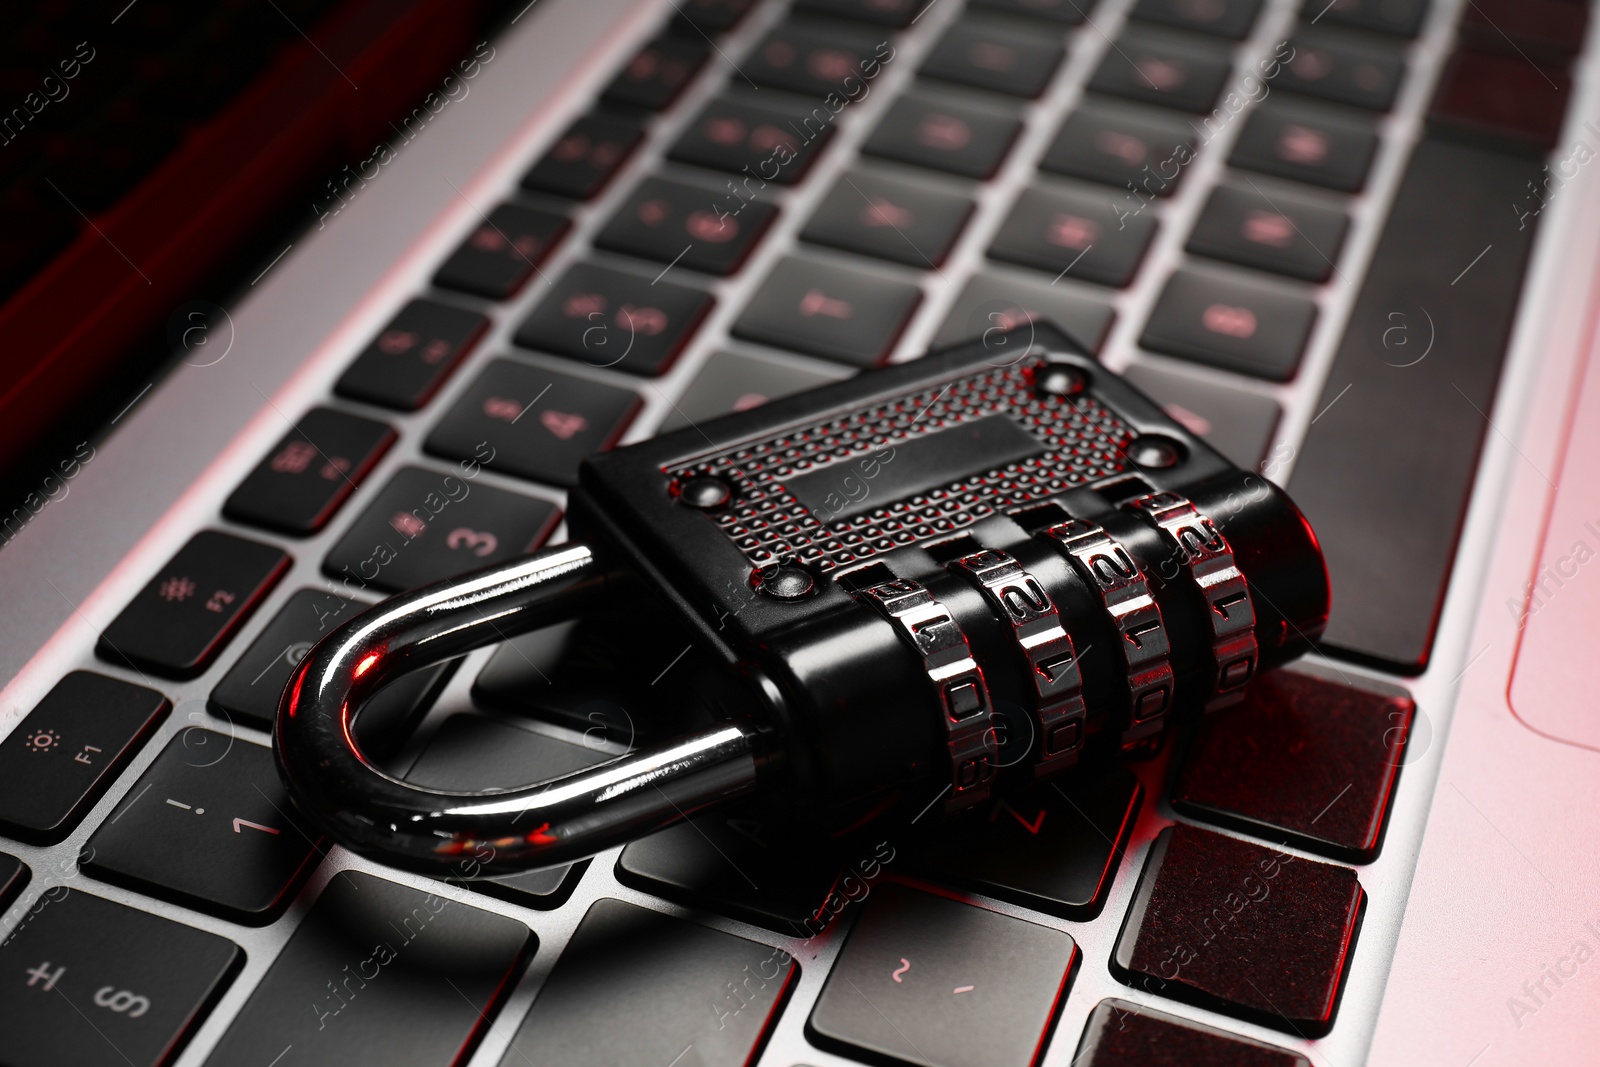 Photo of Cyber security. Metal combination padlock on laptop, closeup